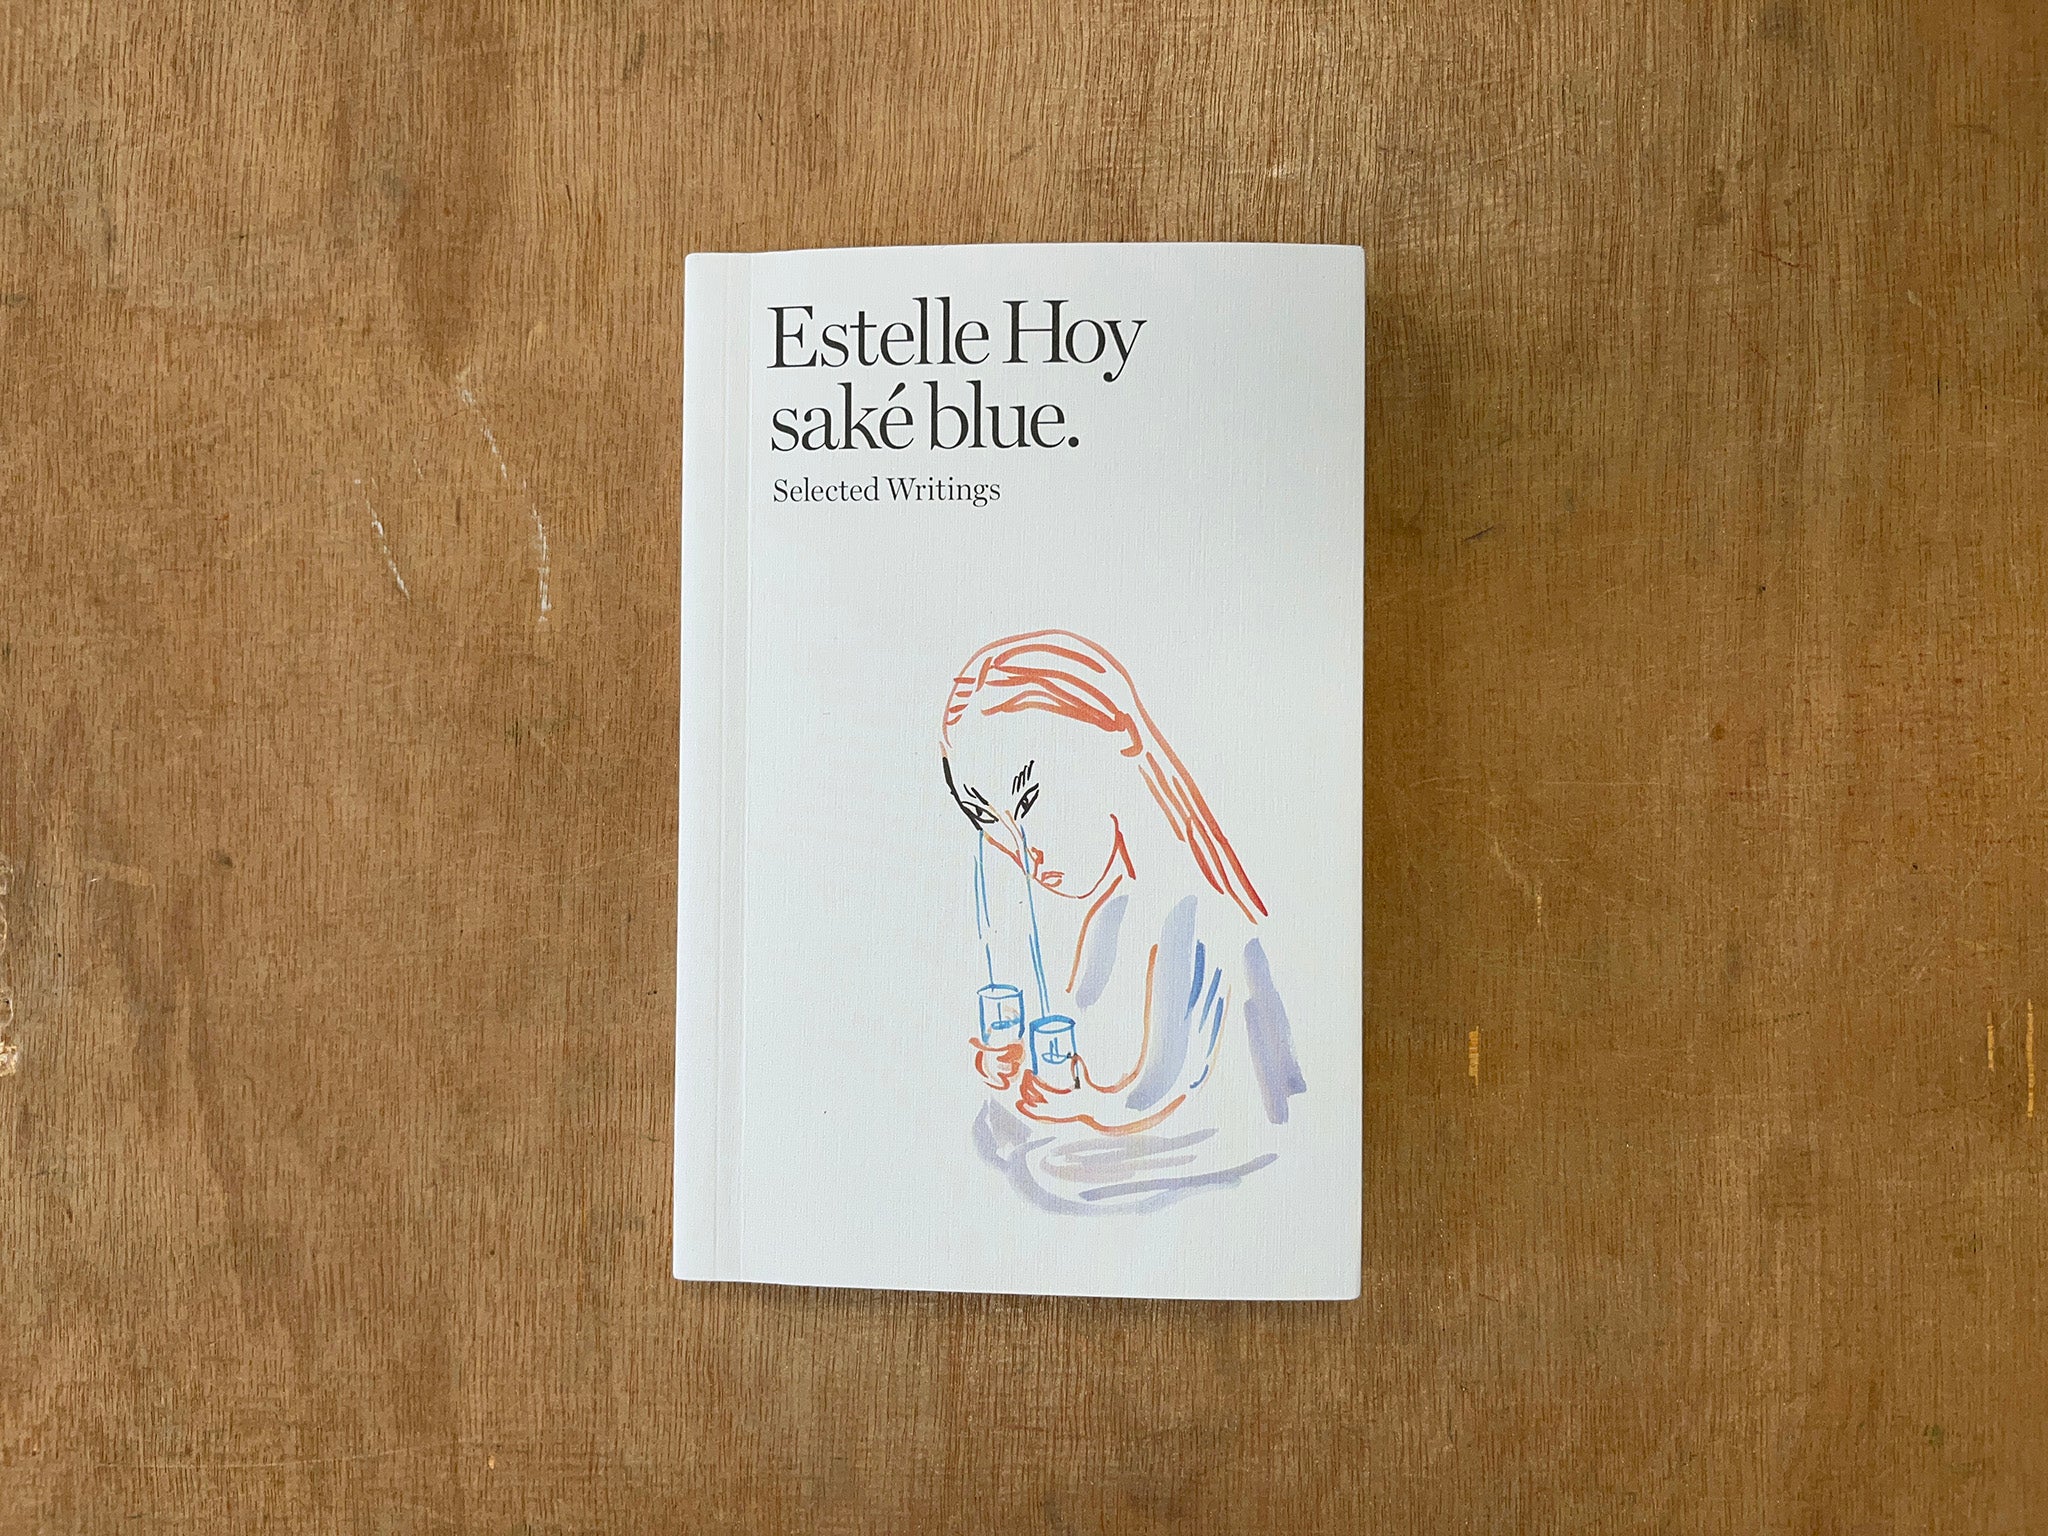 SAKÉ BLUE. SELECTED WRITINGS by Estelle Hoy